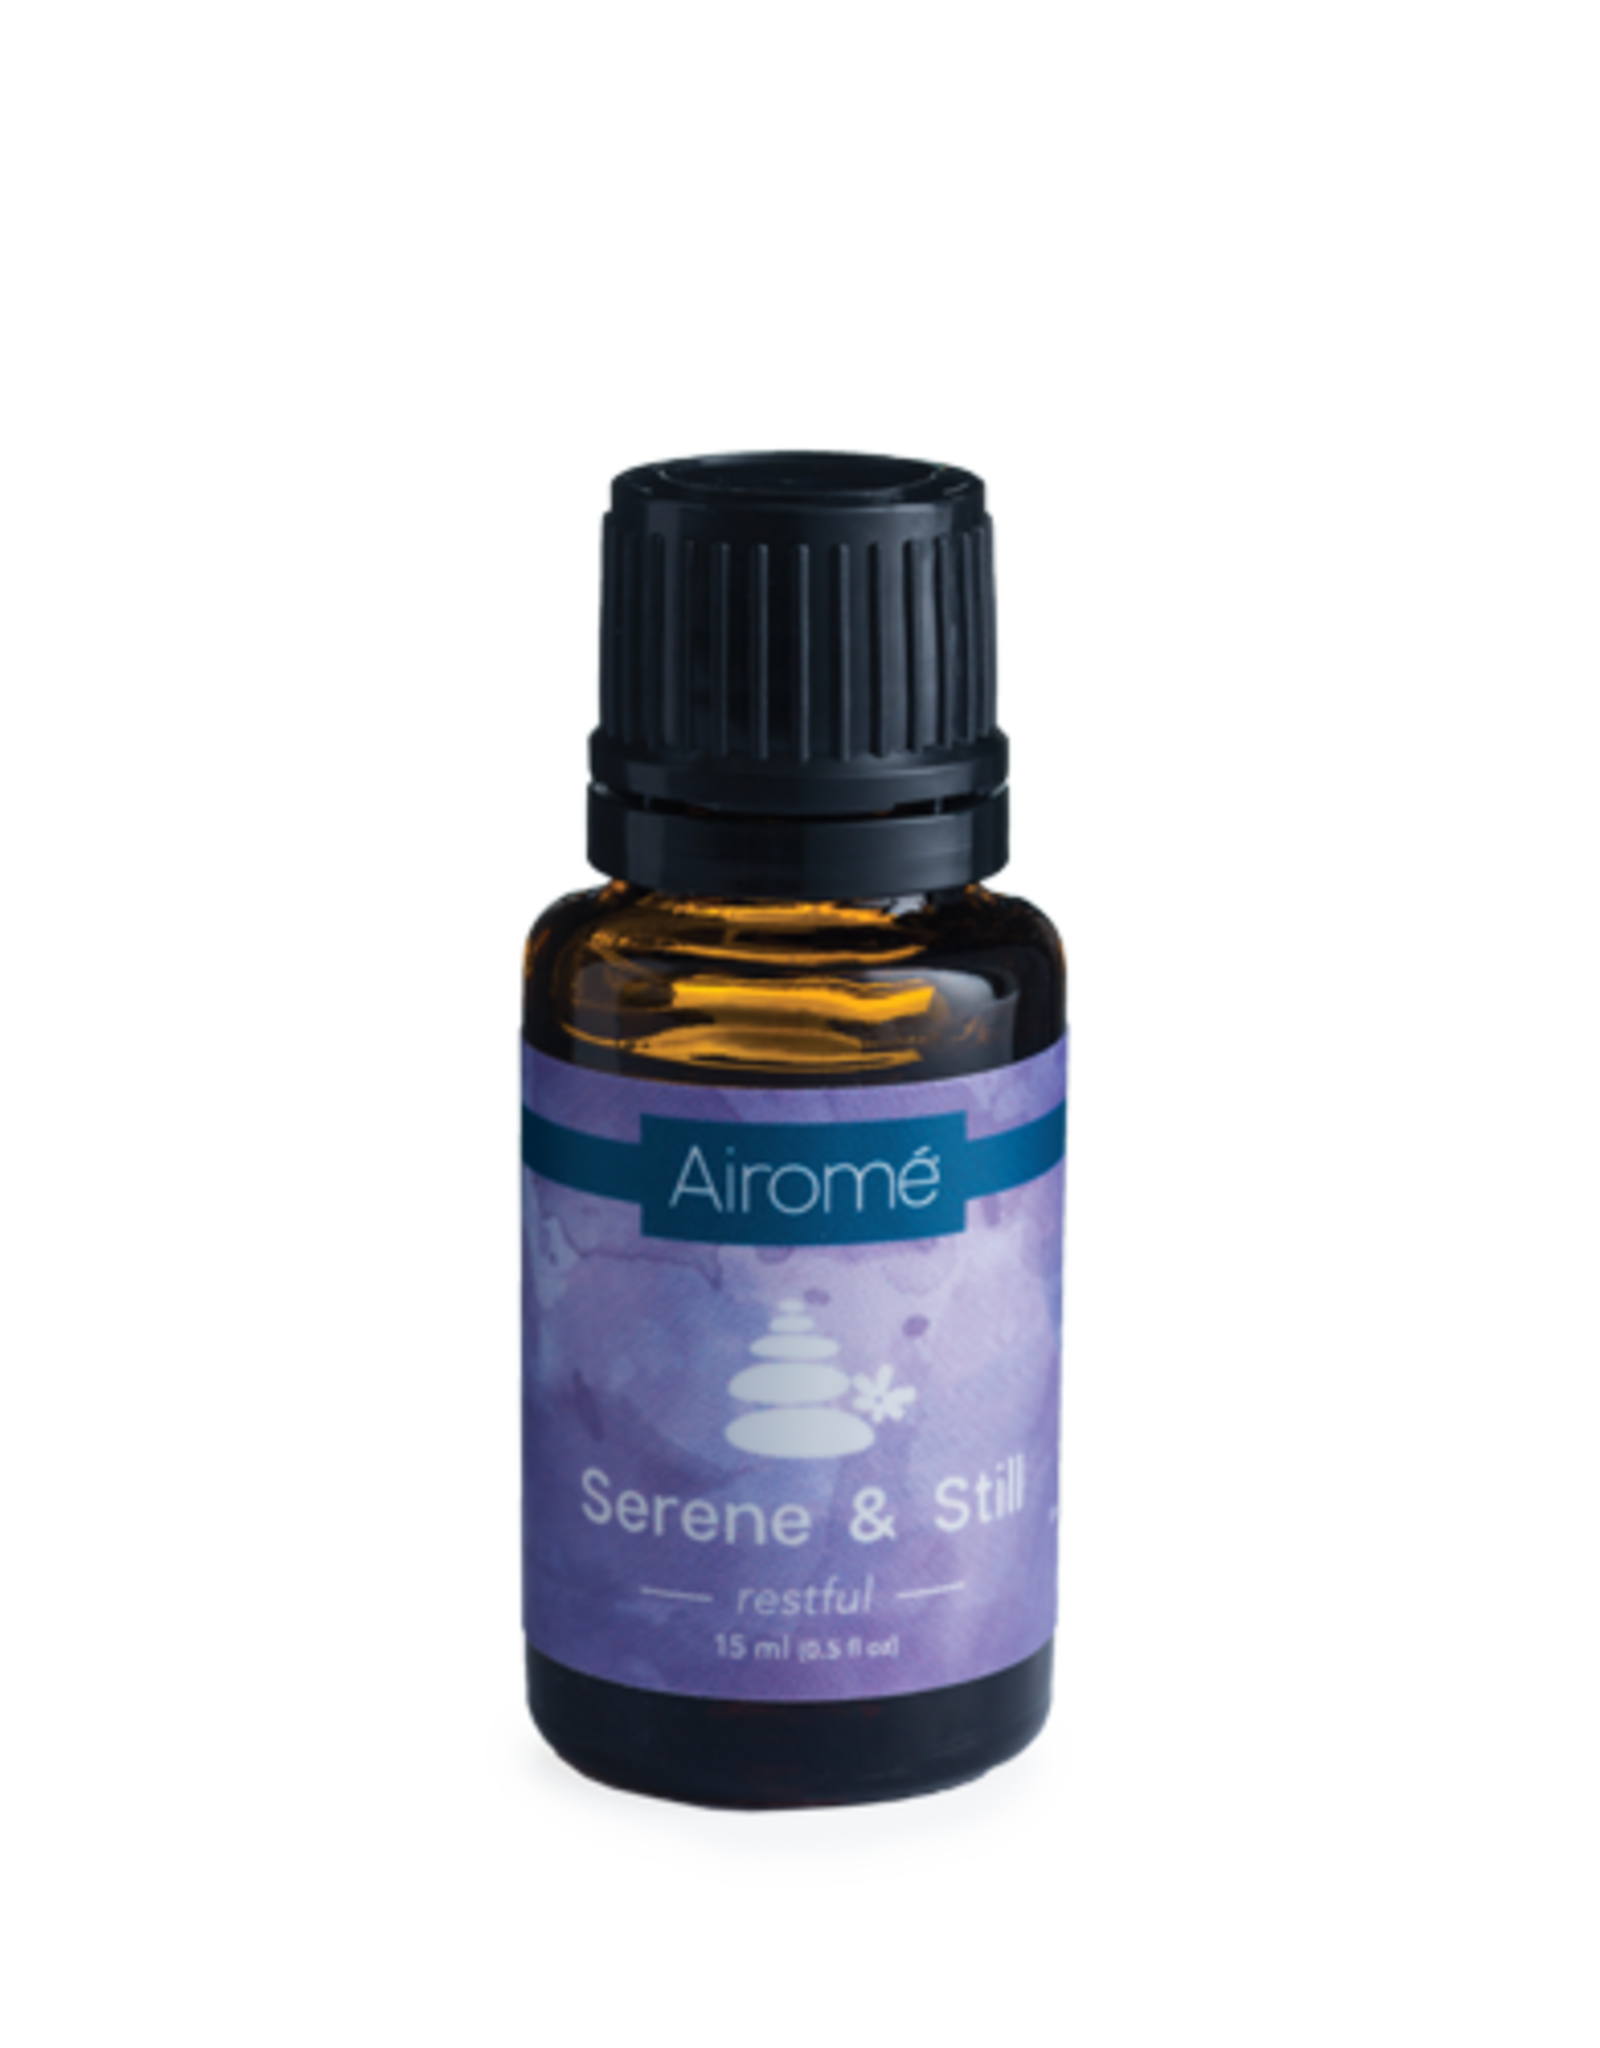 Airome Serene & Still Essential Oil